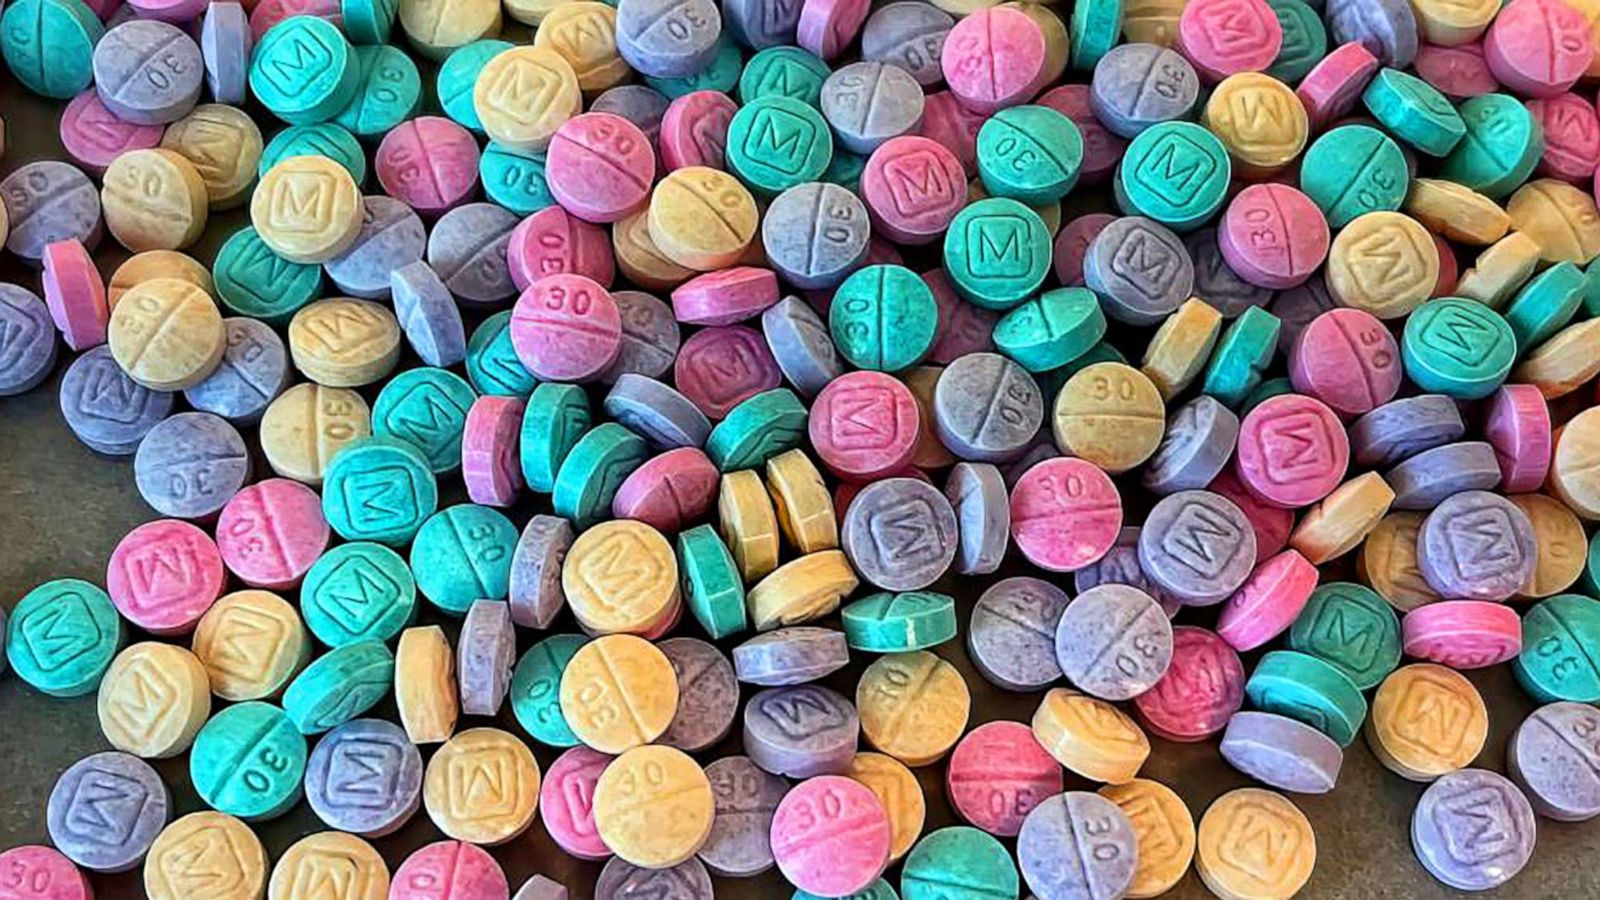 Officials warn about candy-lookalike 'rainbow' fentanyl ahead of Halloween  - Good Morning America